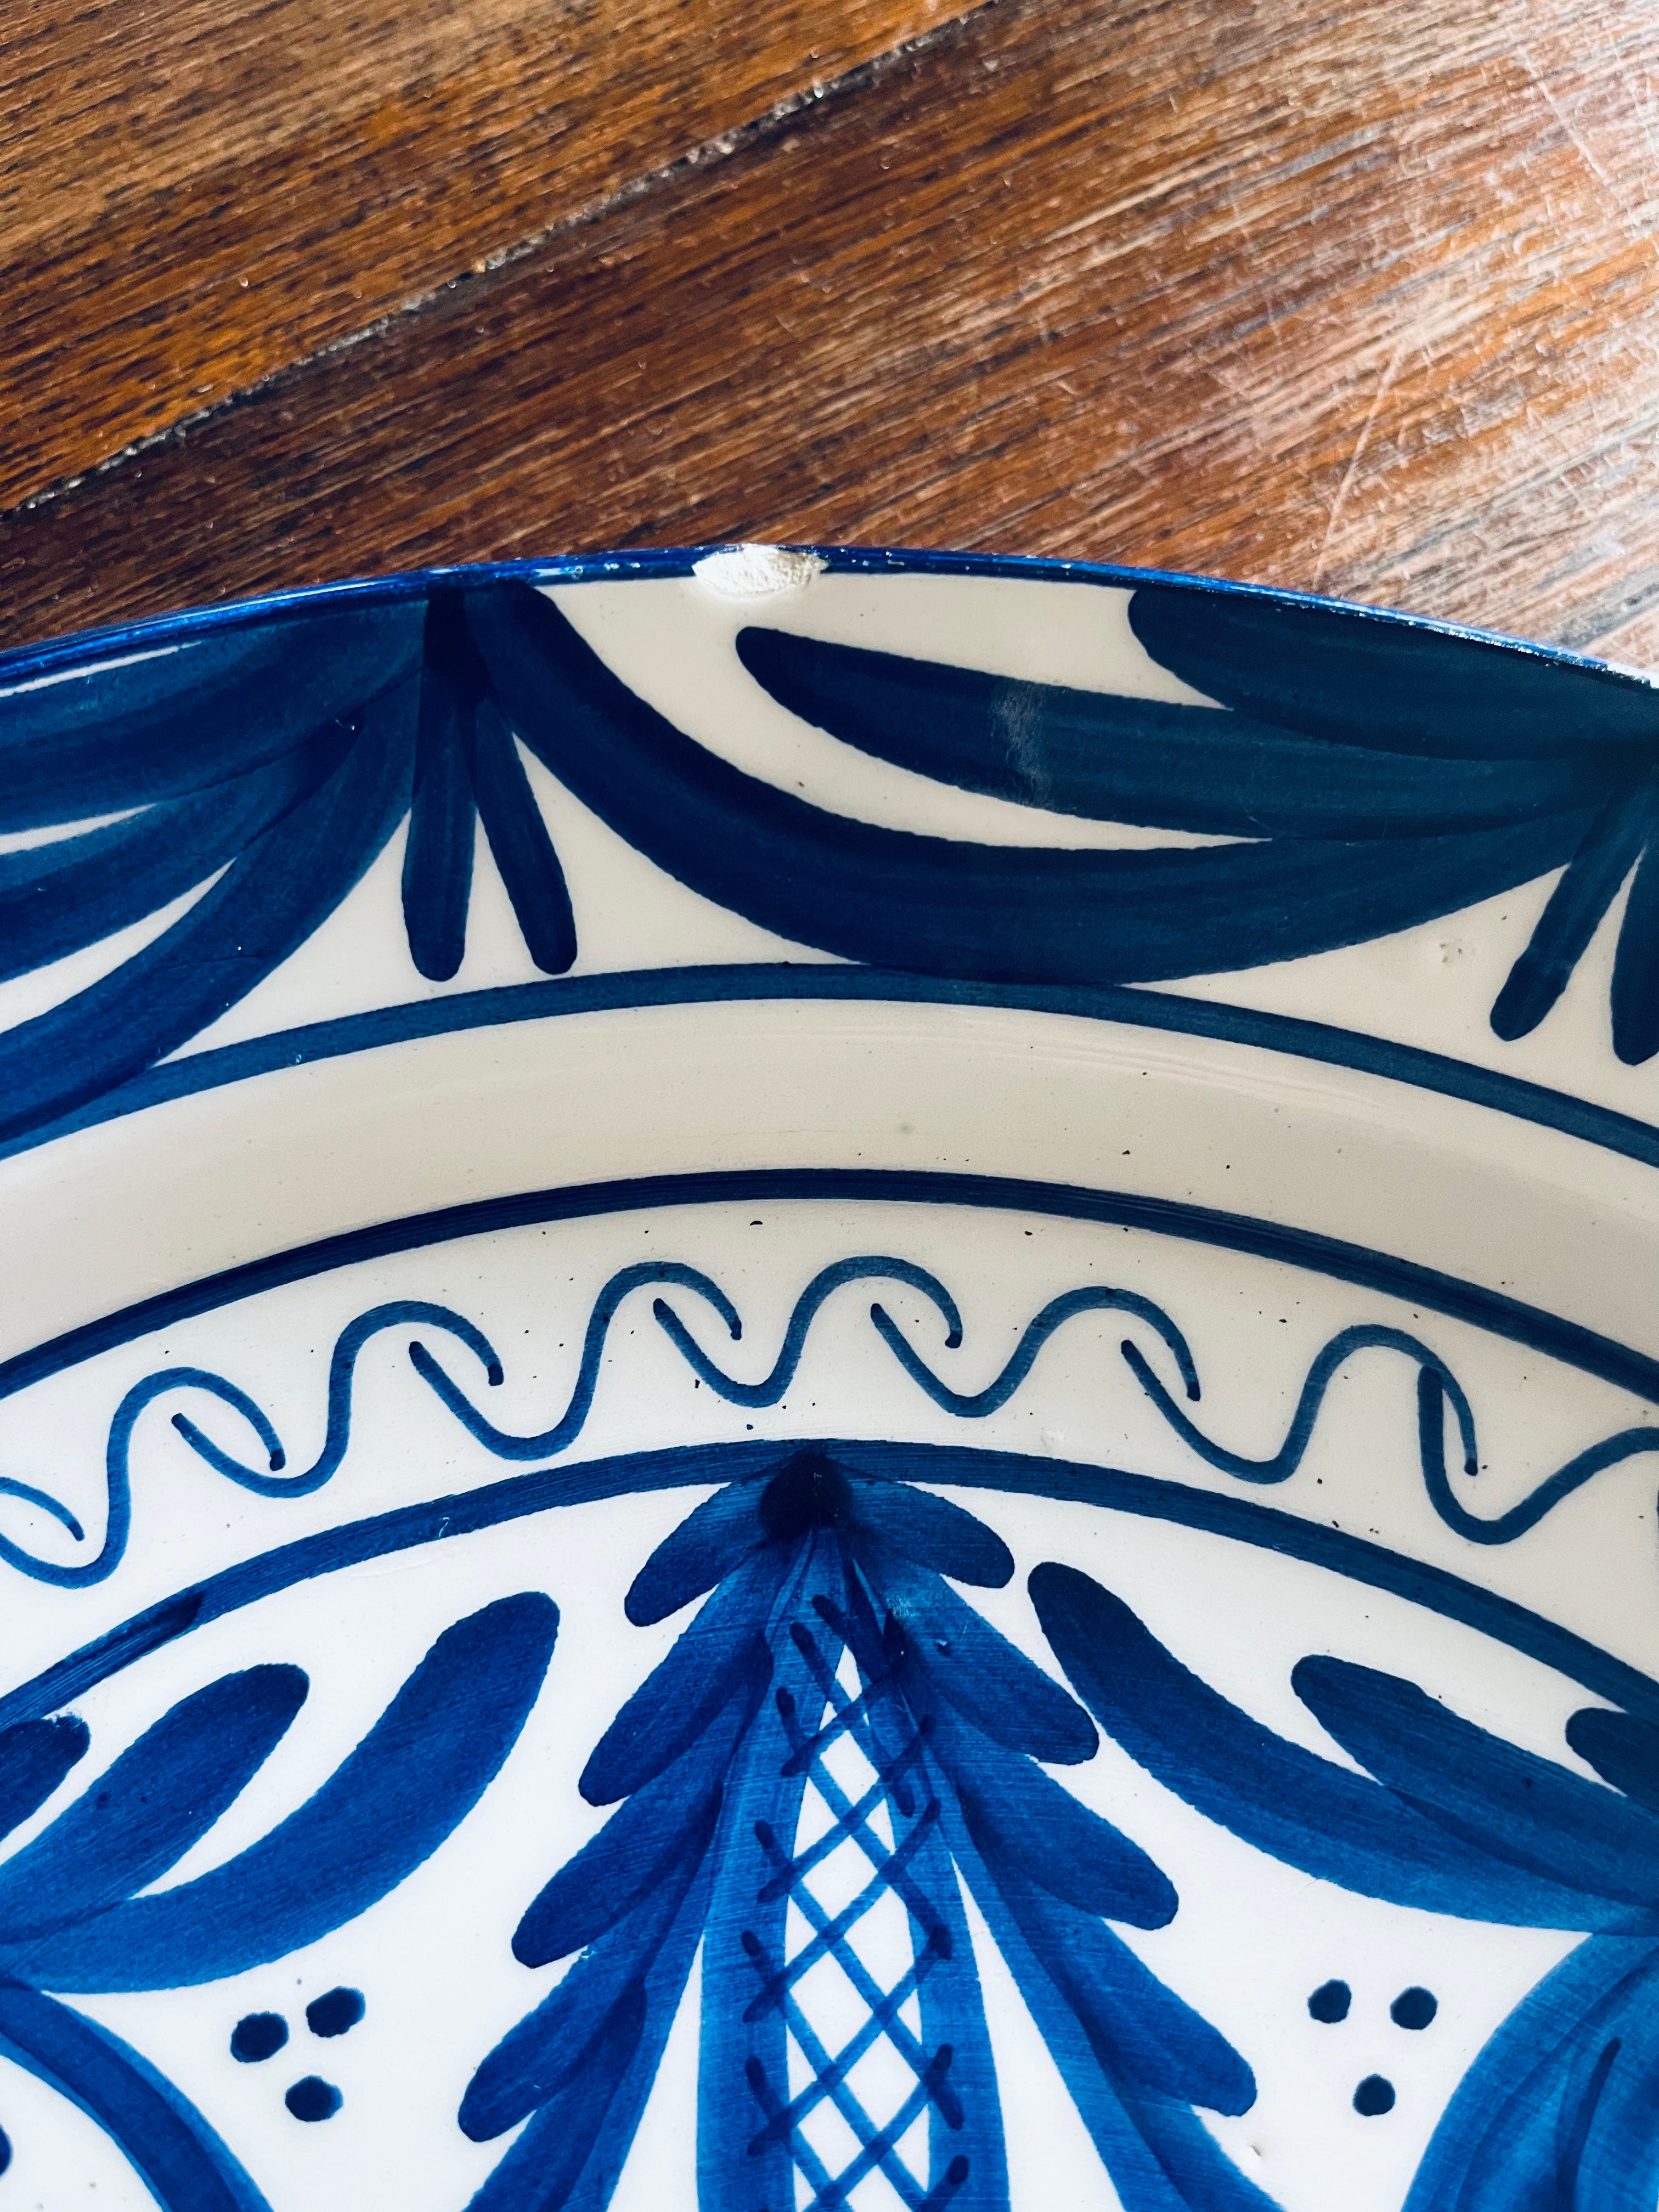 Große spanische Keramikschale Platte handbemalt